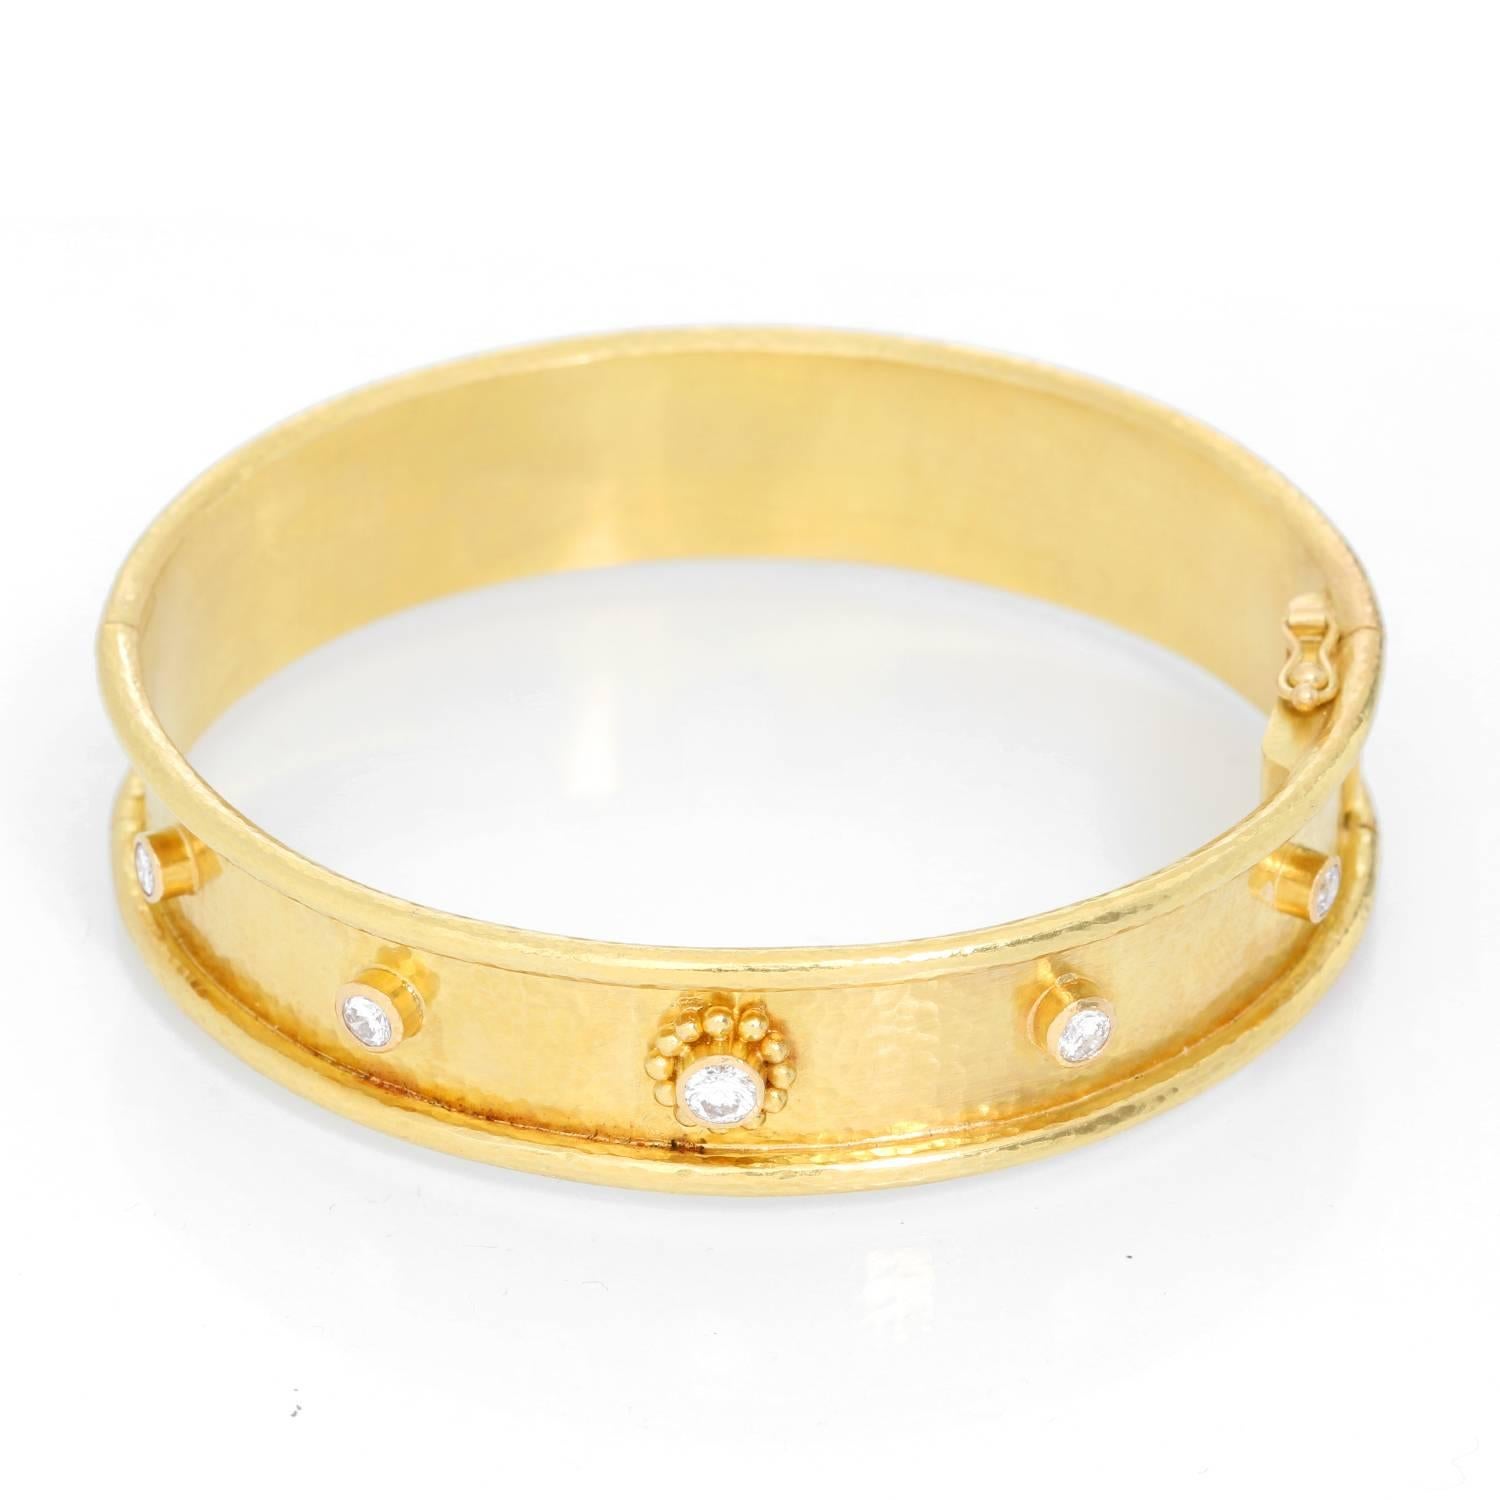 Elizabeth Locke 19K Yellow Gold bangle Bracelet - . 19K Yellow Gold Diamond bangle, Diameter 2 1/4 in. Hallmark; Makers Mark. Total weight 31.5 grams.